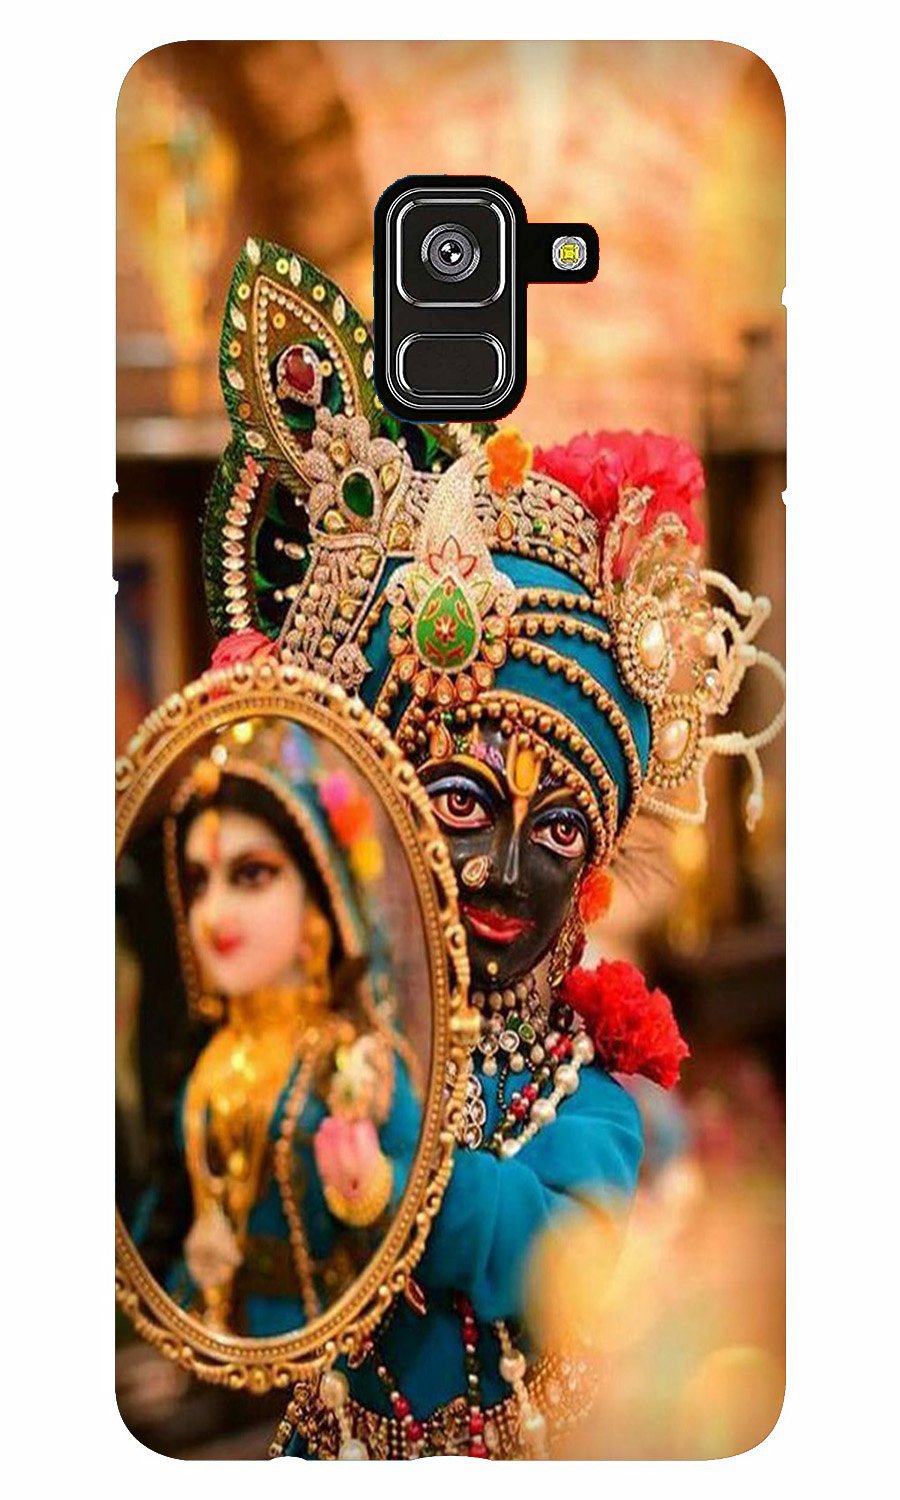 Lord Krishna5 Case for Galaxy A5 (2018)